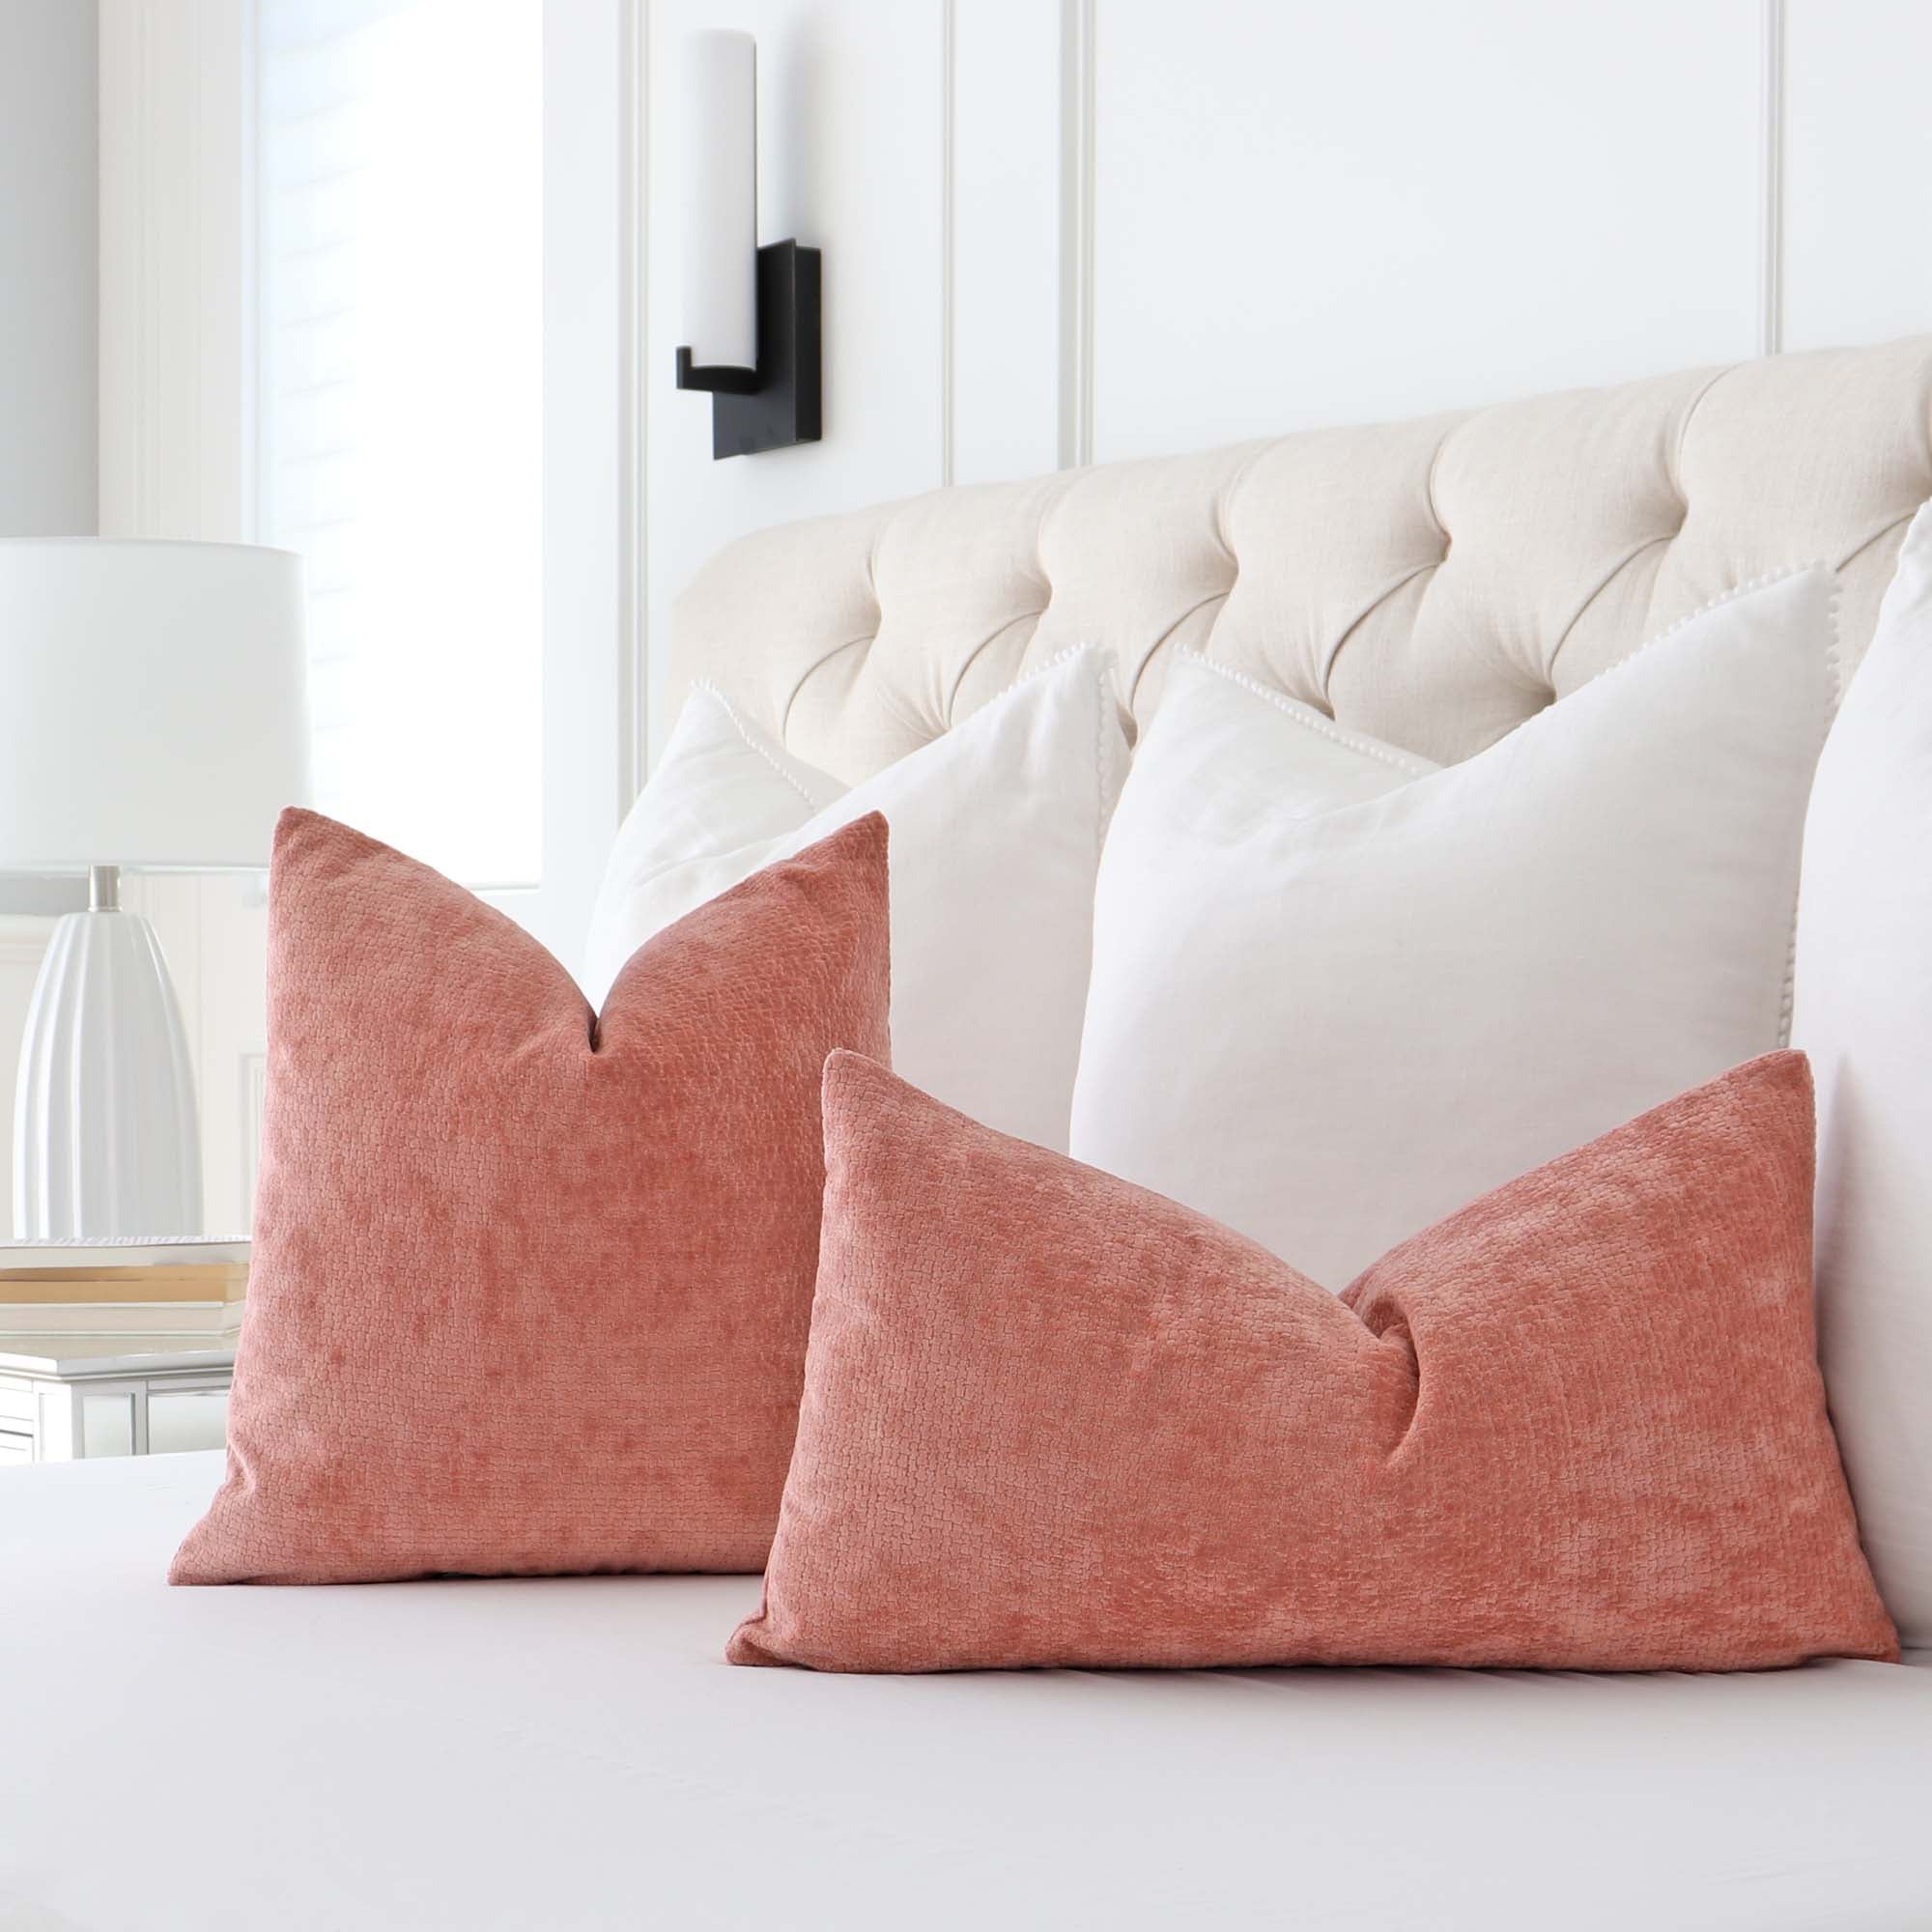 Kelly Wearstler Lee Jofa Rebus Sorbet Salmon Pink Velvet Throw Pillow Cover in Bedroom on Bed